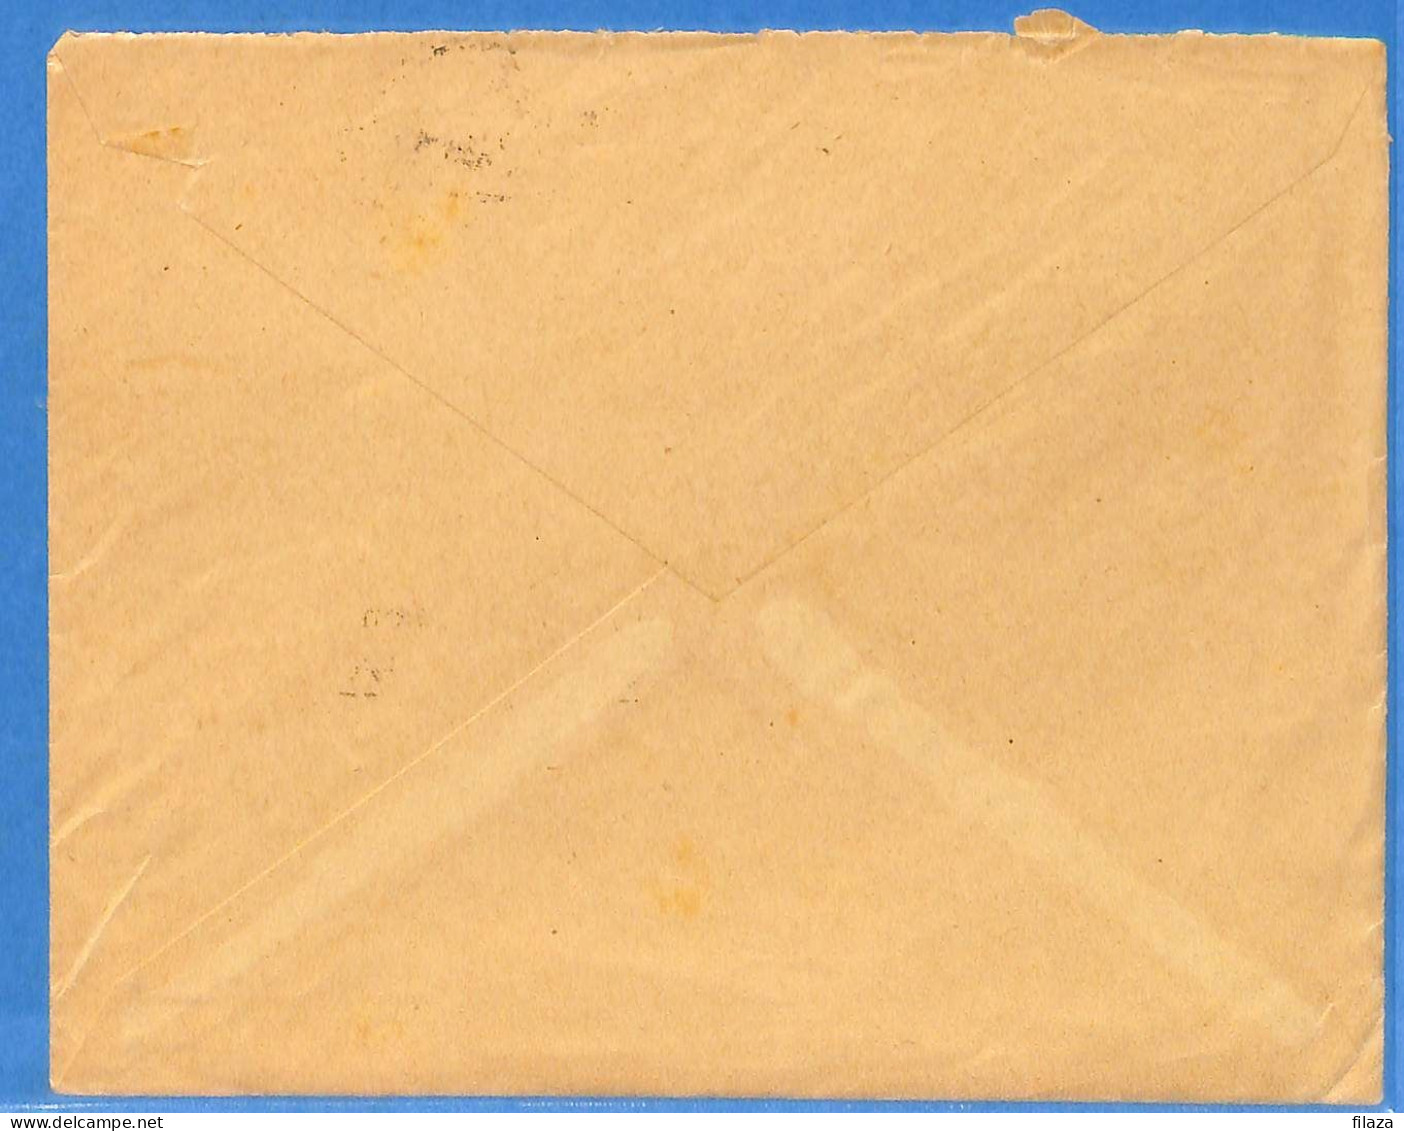 Allemagne Reich 1938 - Lettre De Oldenburg - G33208 - Storia Postale